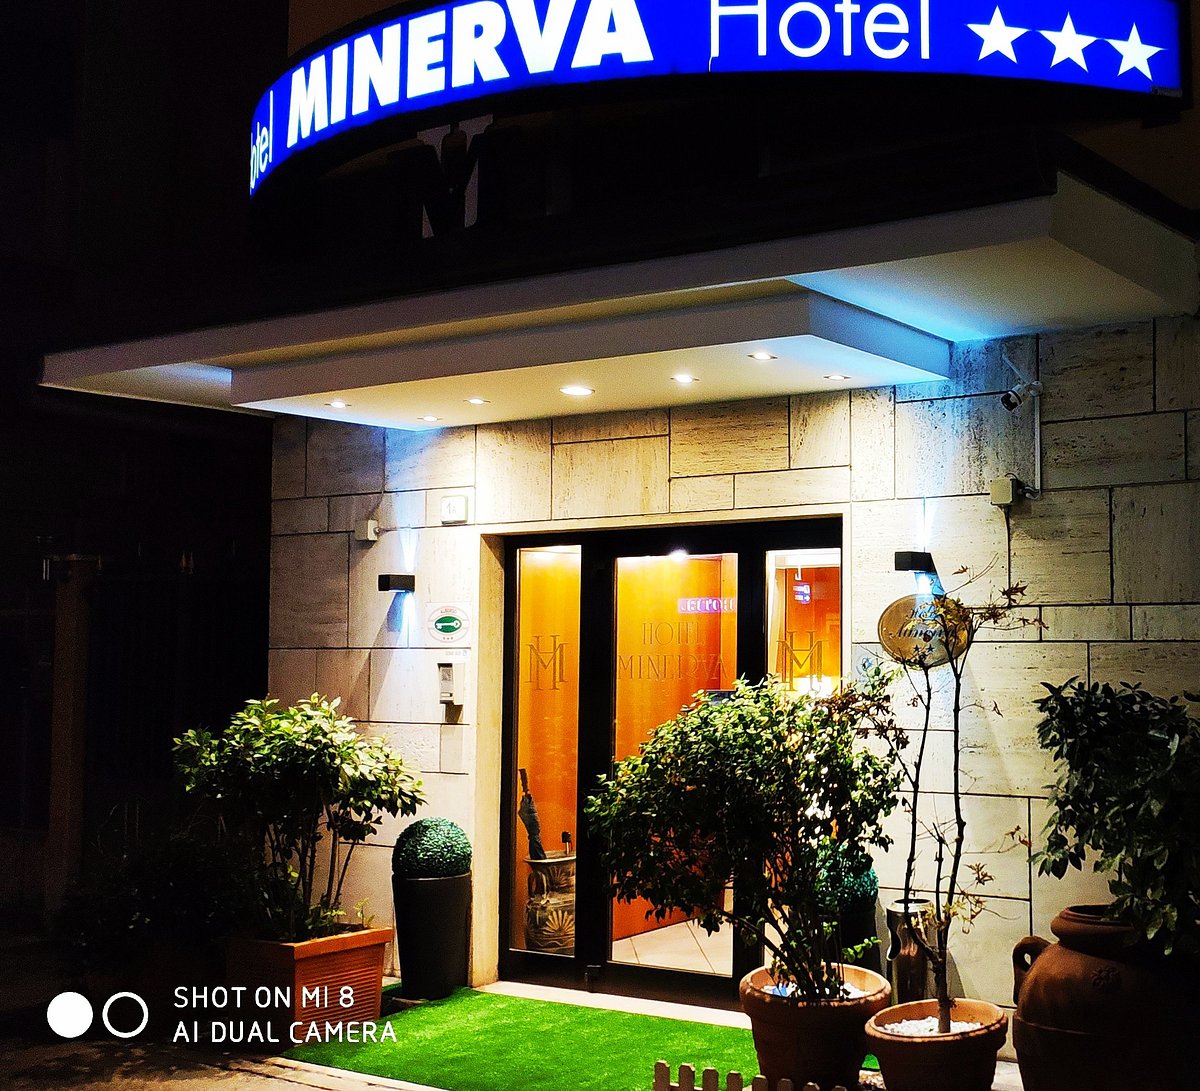 Hotel Minerva, hotel a Ravenna